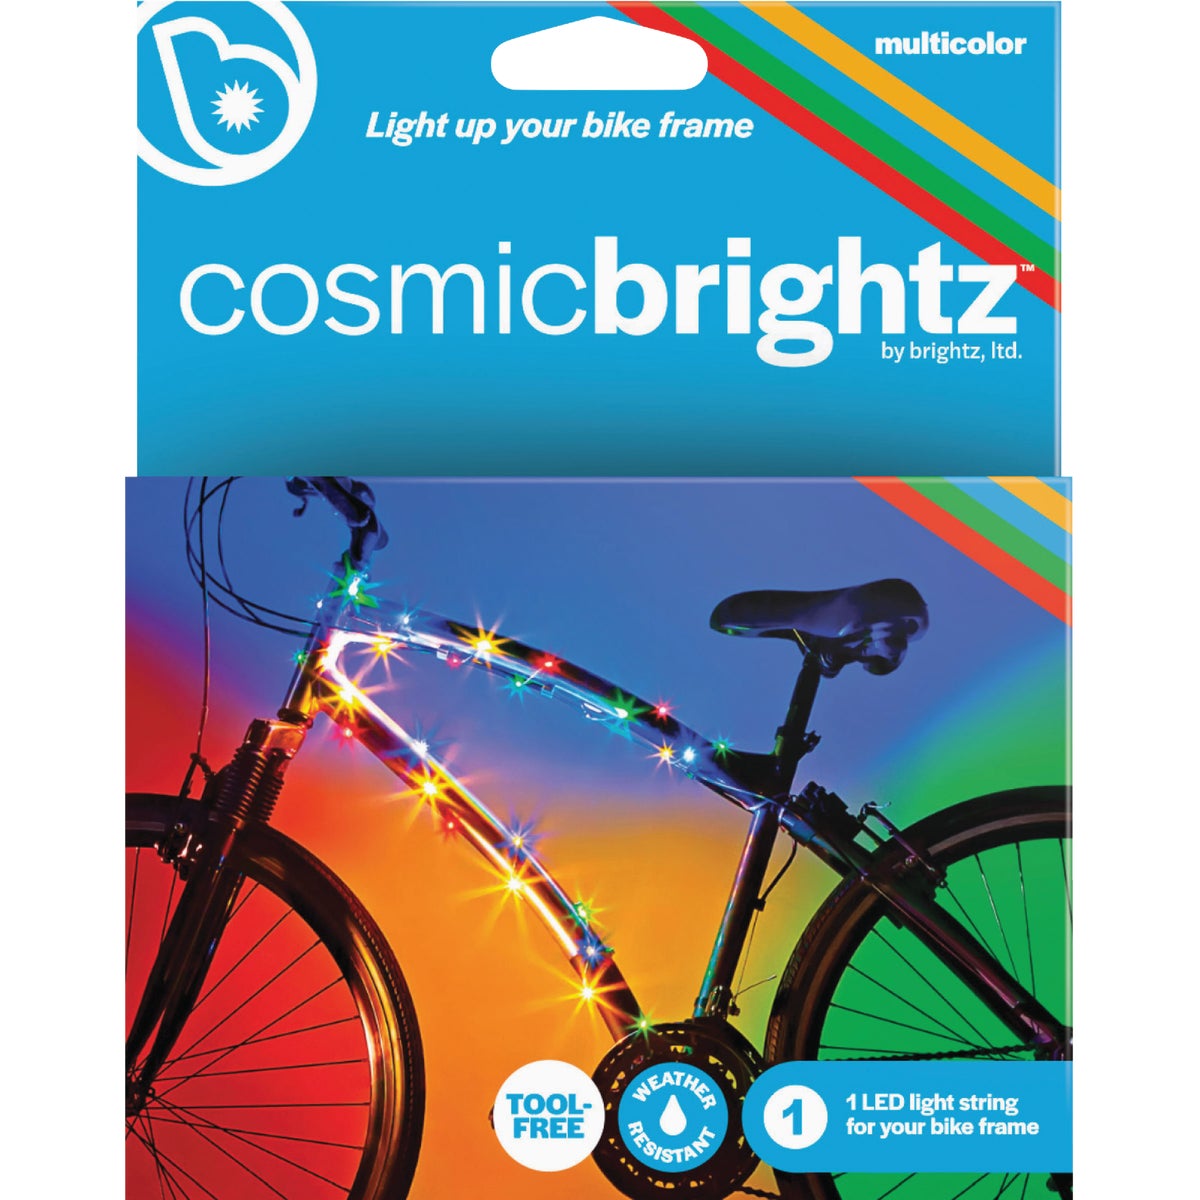 Item 705135, Ideal lights to brighten up your bike frame.